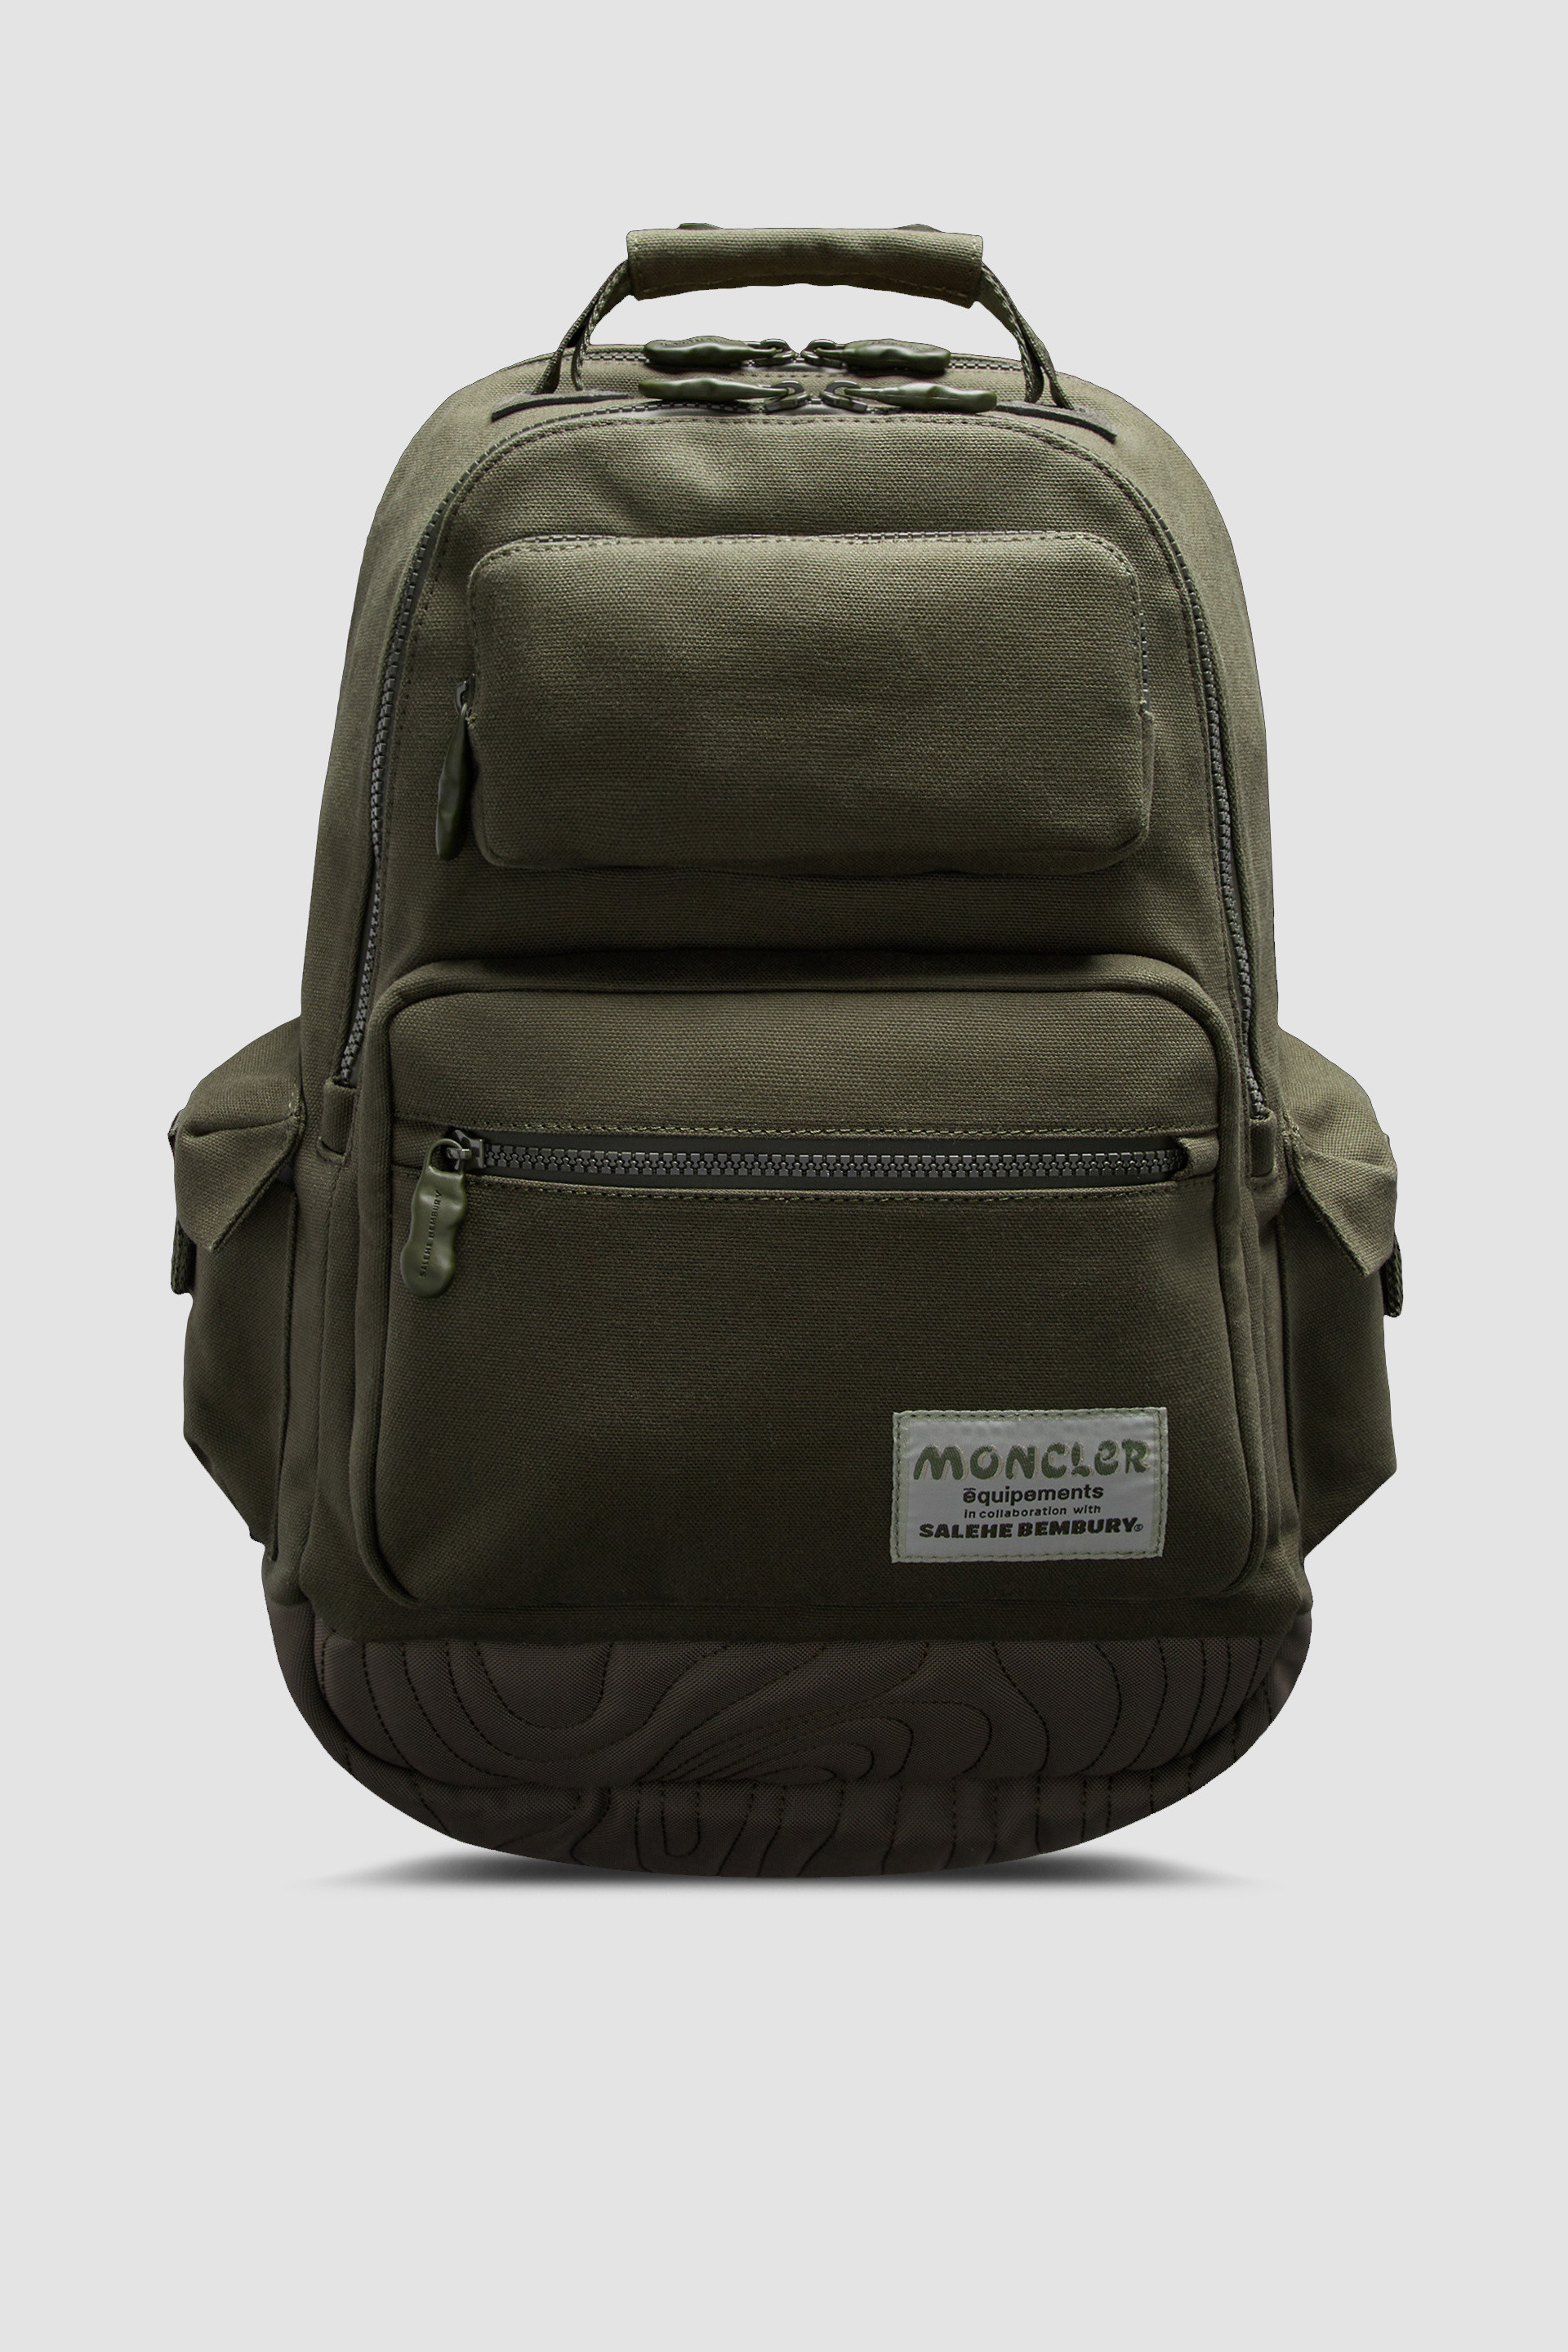 Dark Green Canvas Backpack - Moncler x Salehe Bembury for Genius